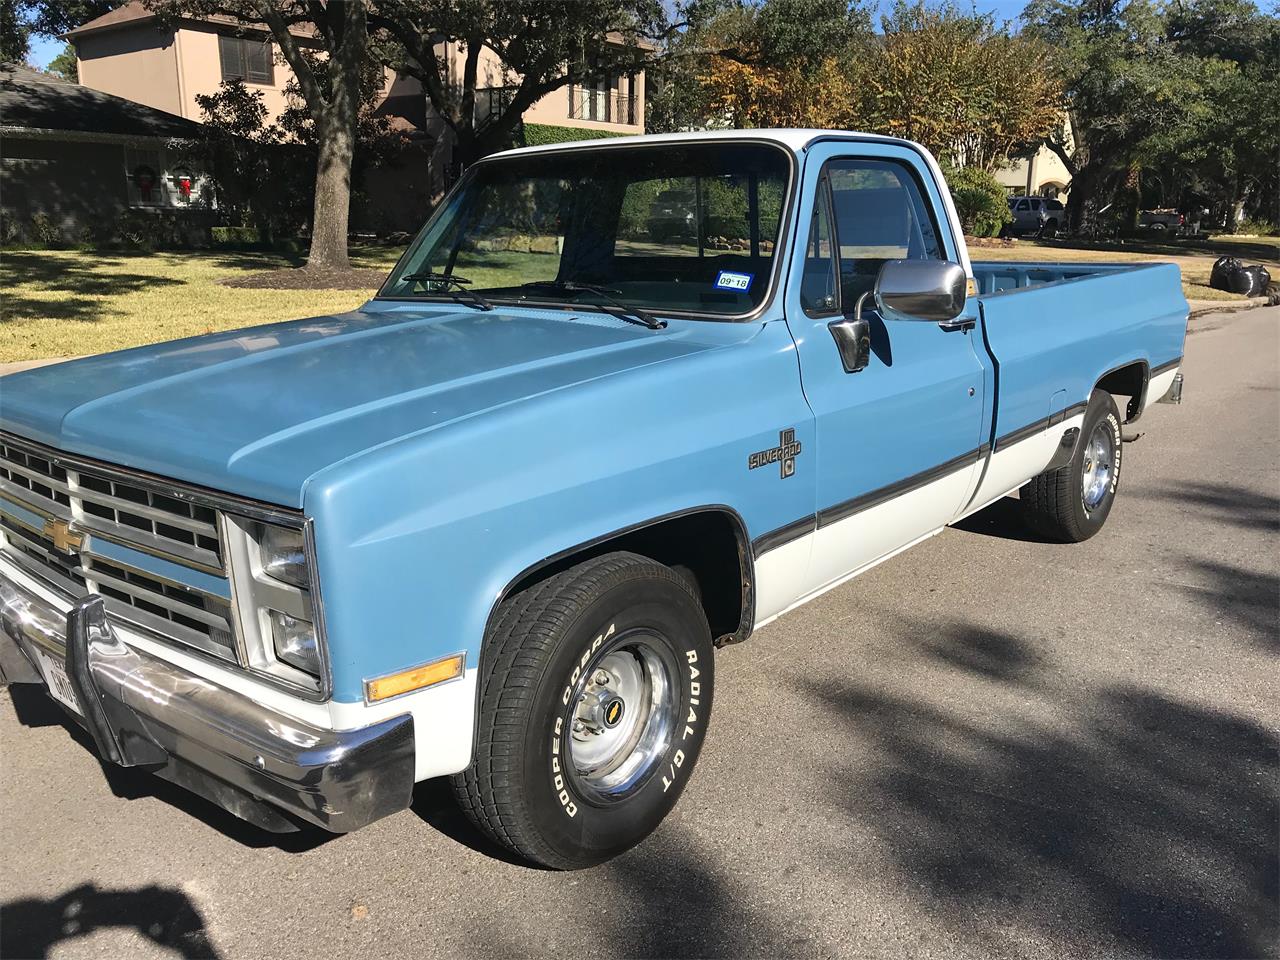 For Sale: 1985 Chevrolet Silverado in Bellaire, Texas.